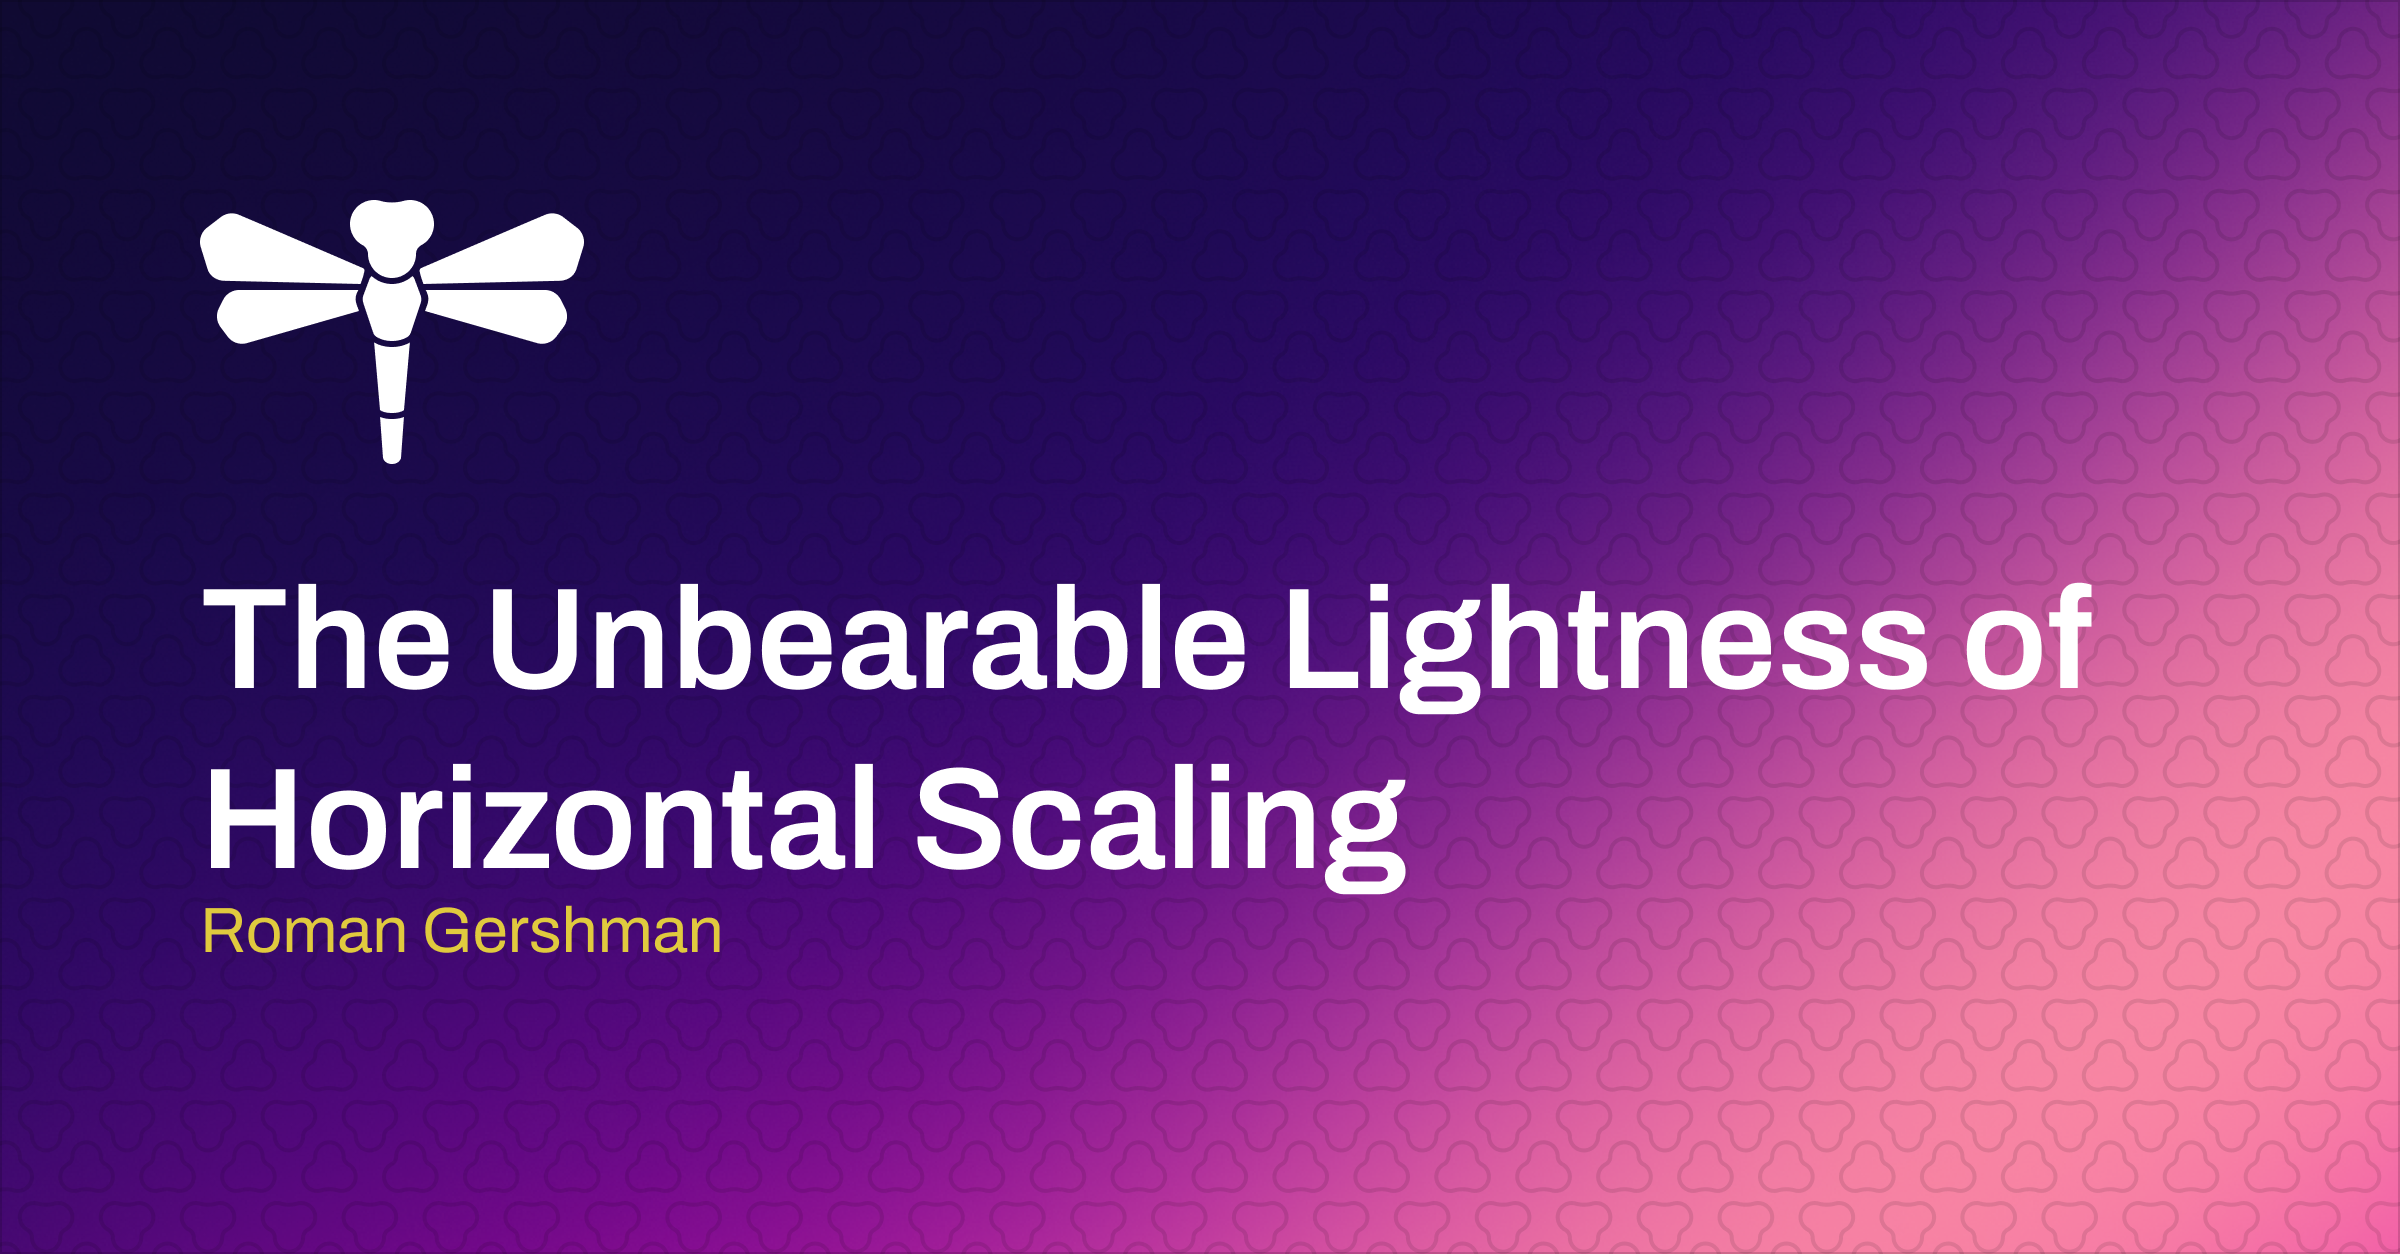 The Unbearable Lightness of Horizontal Scaling